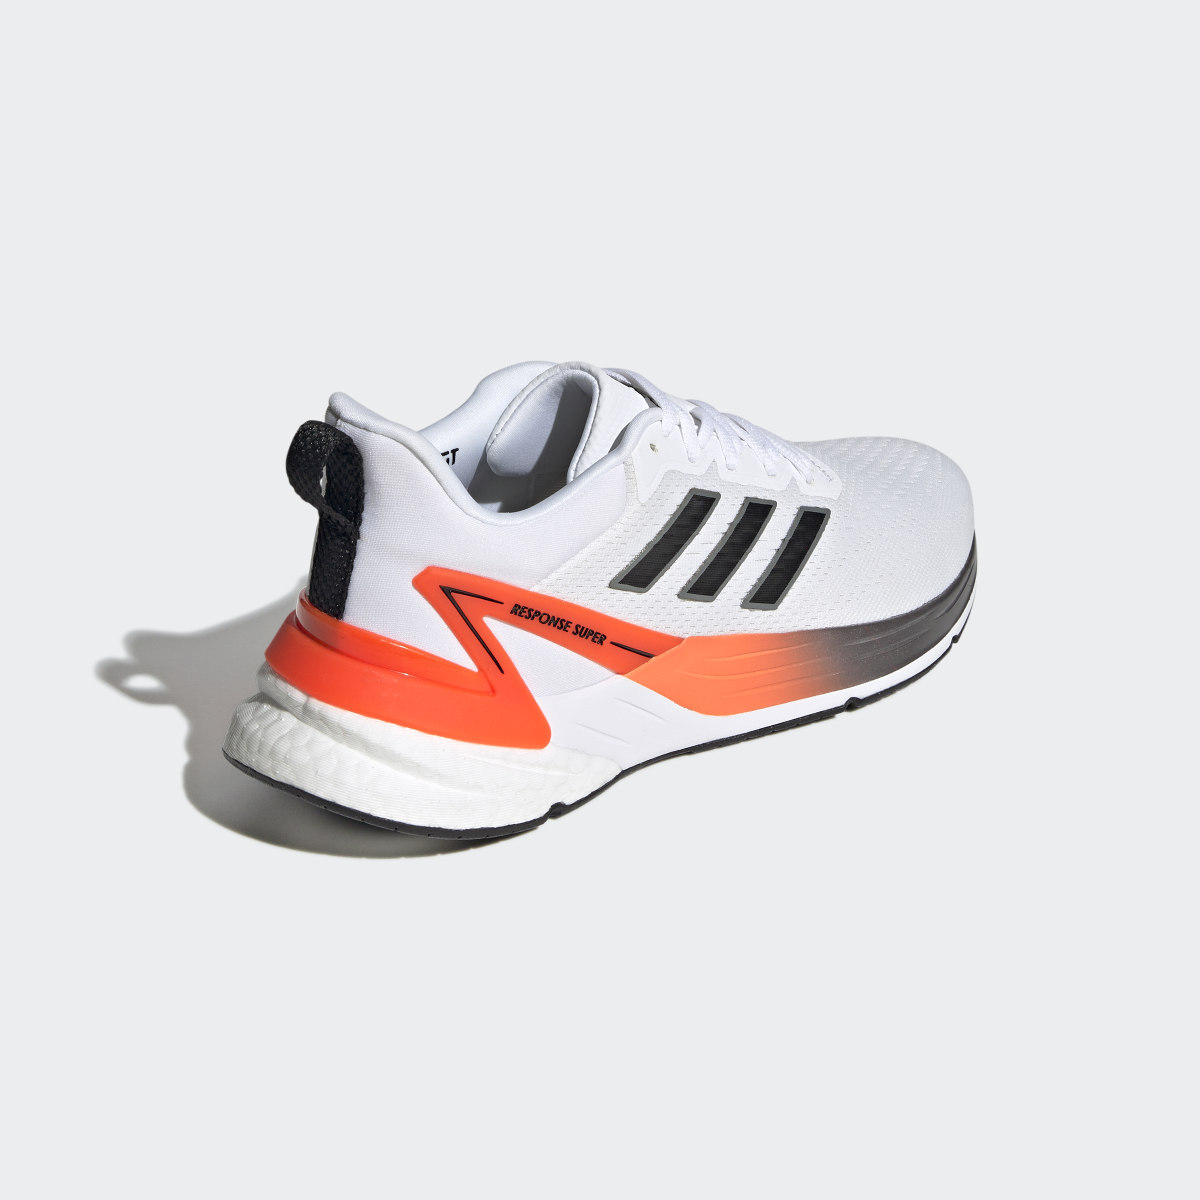 Adidas Response Super 2.0 Shoes. 6